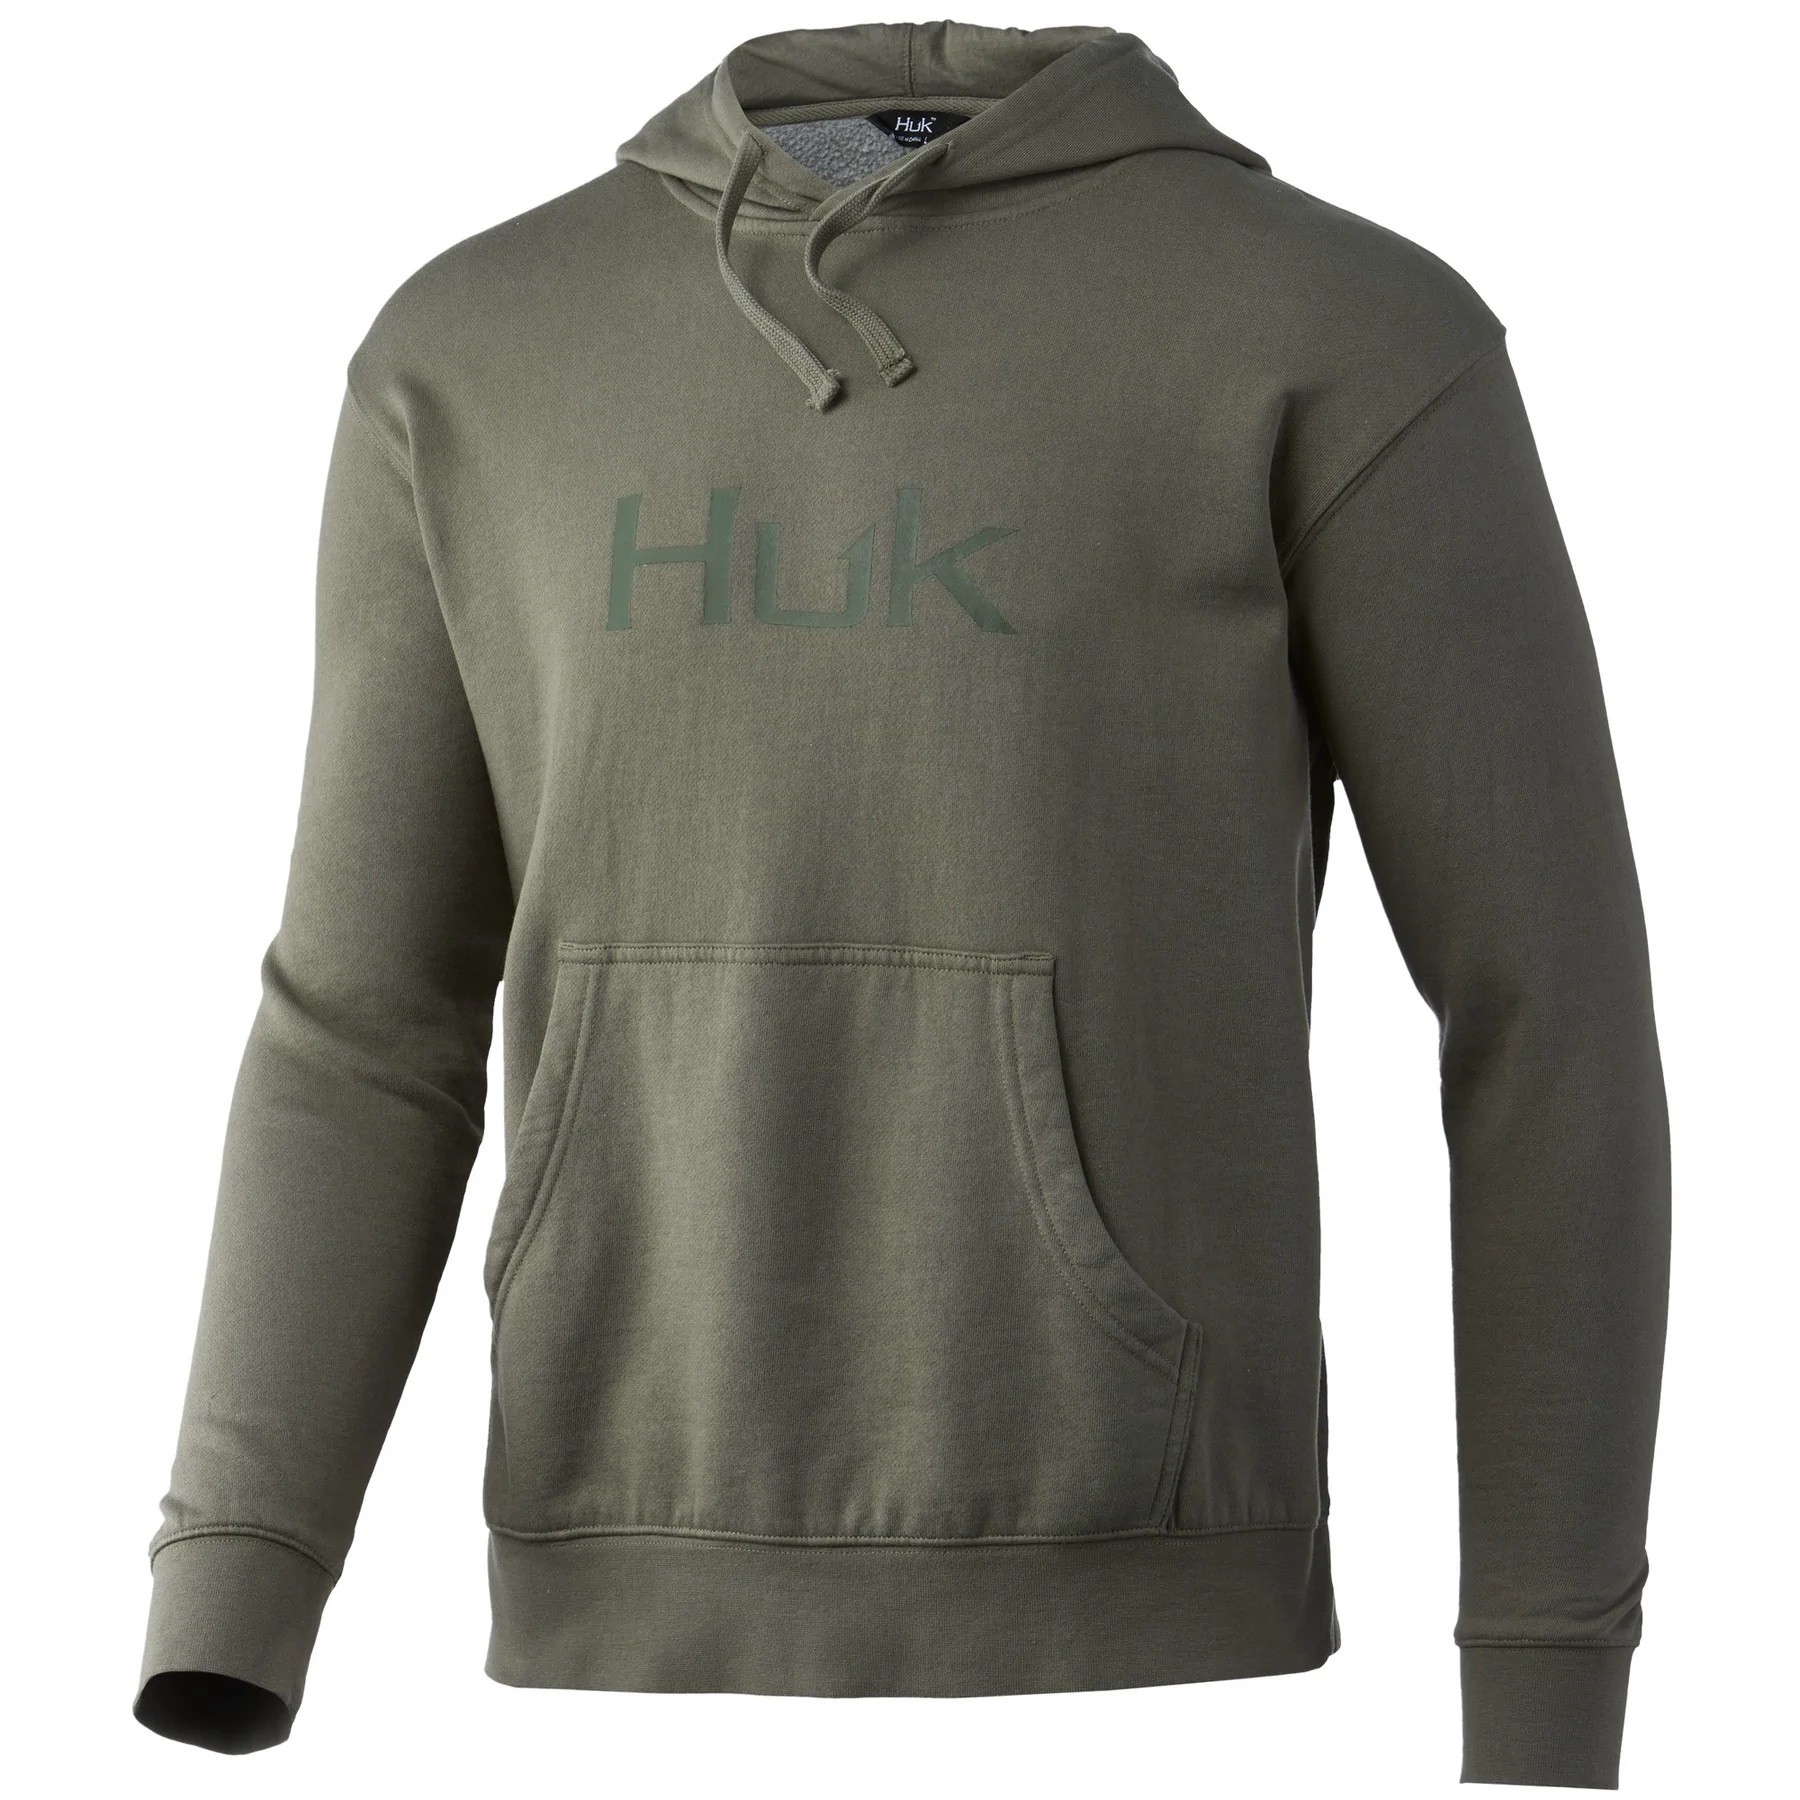 huk logo hoodie - OutfitterSSM